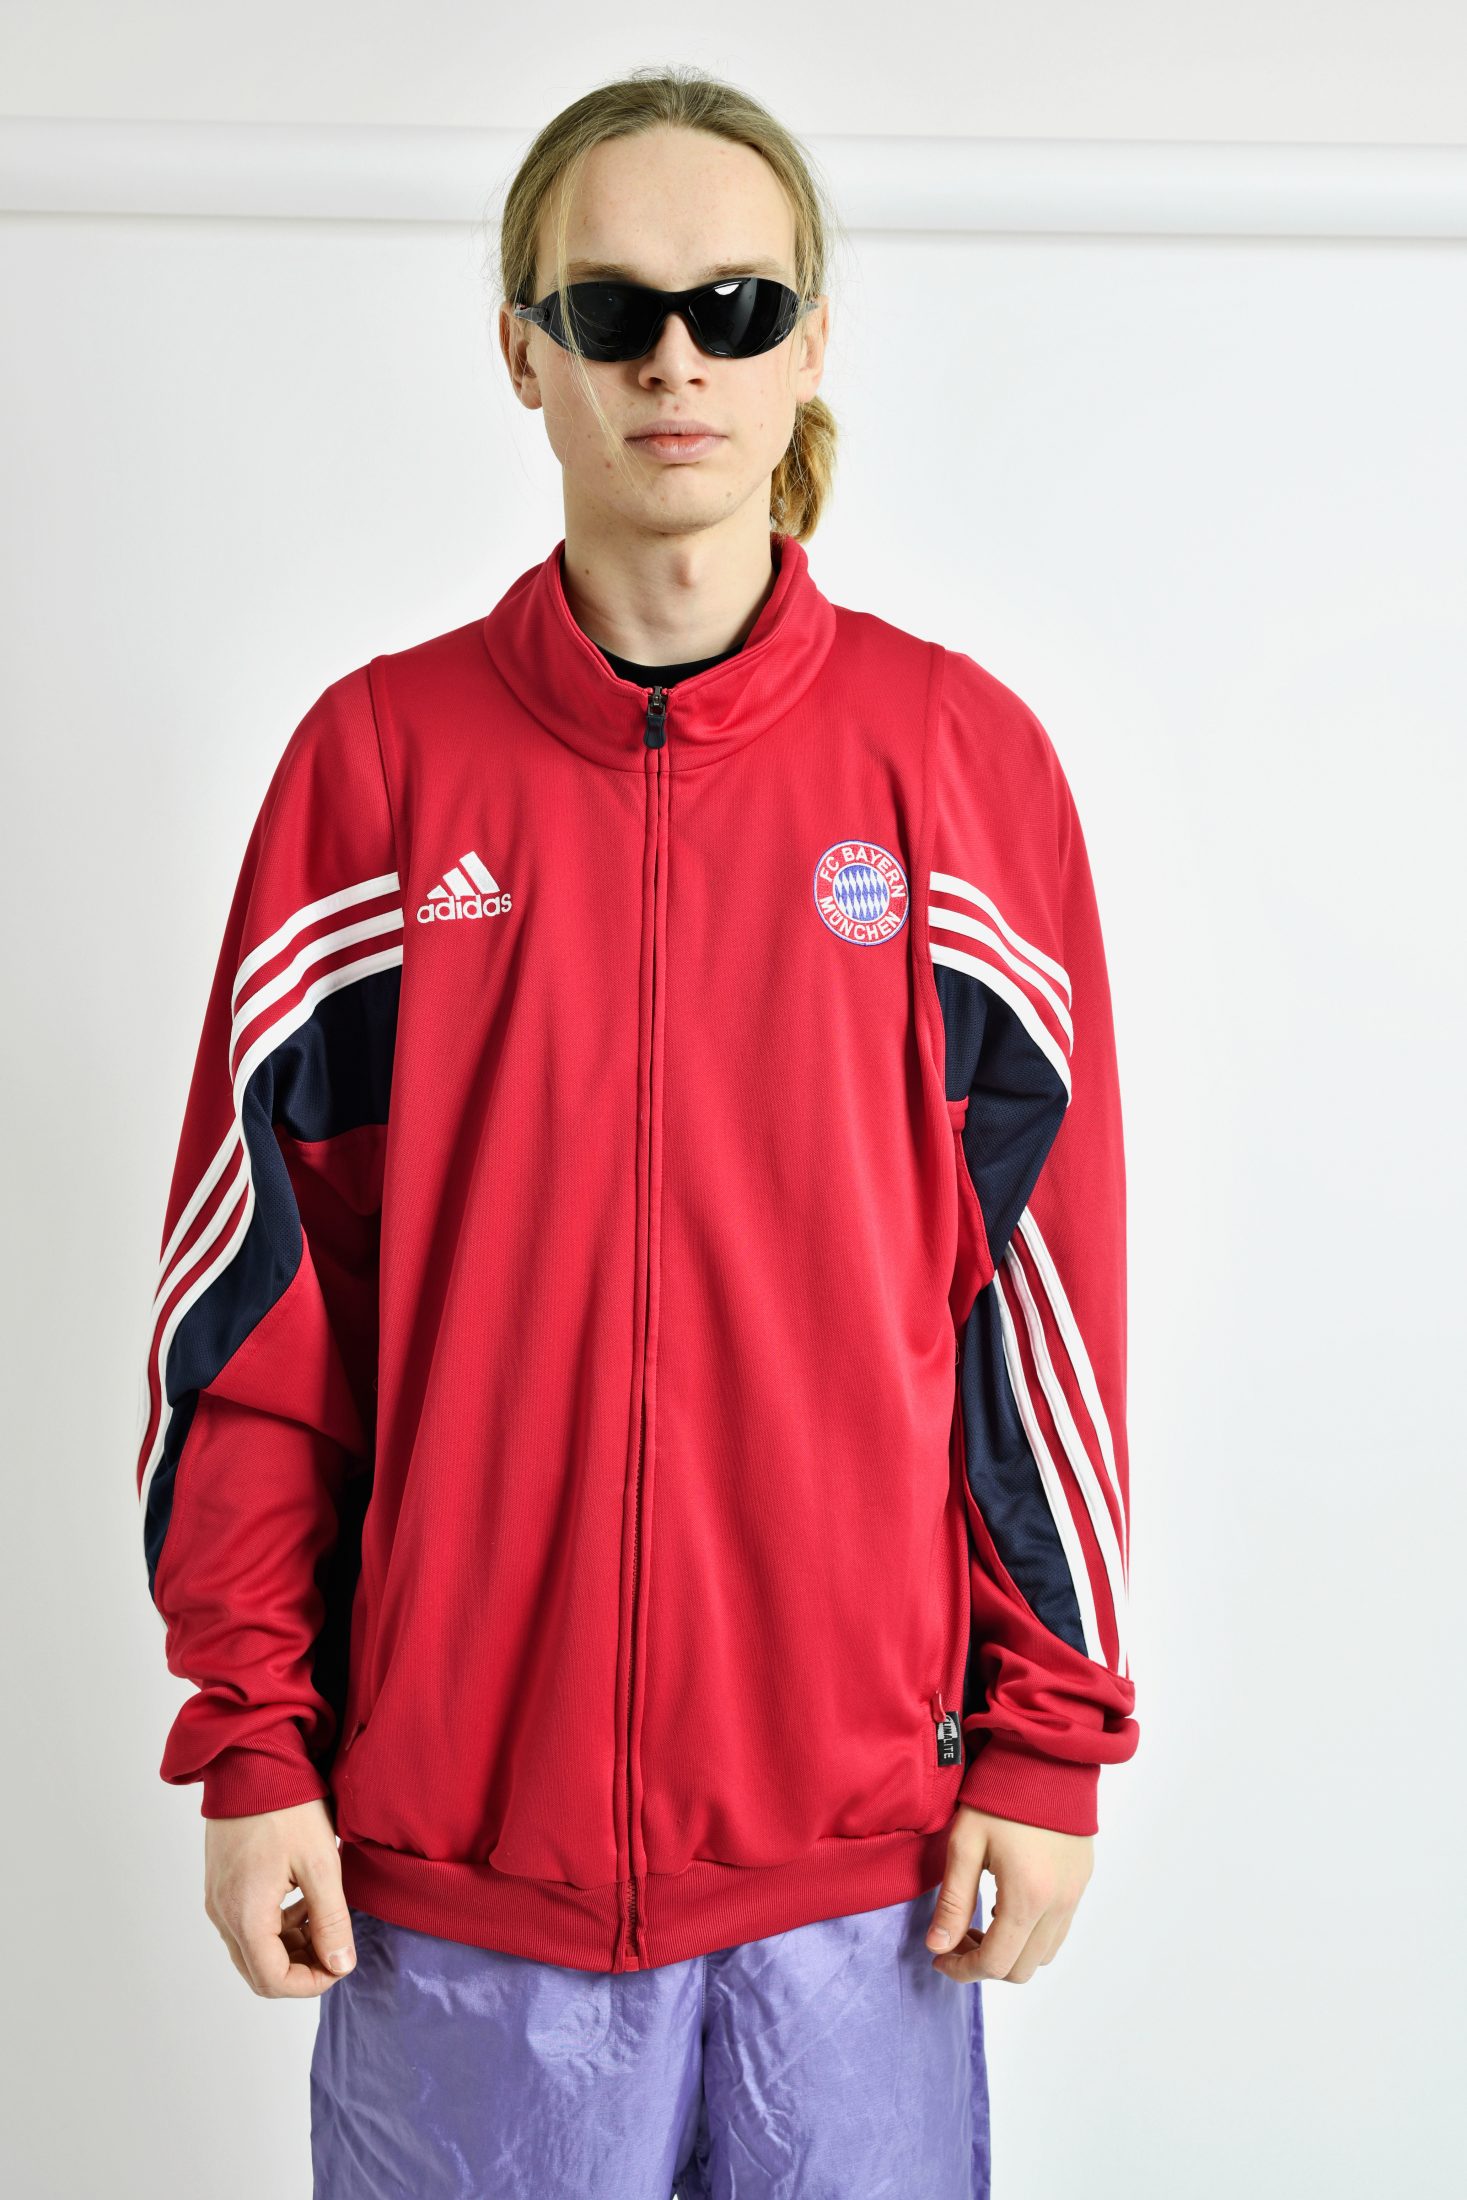 Munich Adidas jacket Vintage clothes online for men